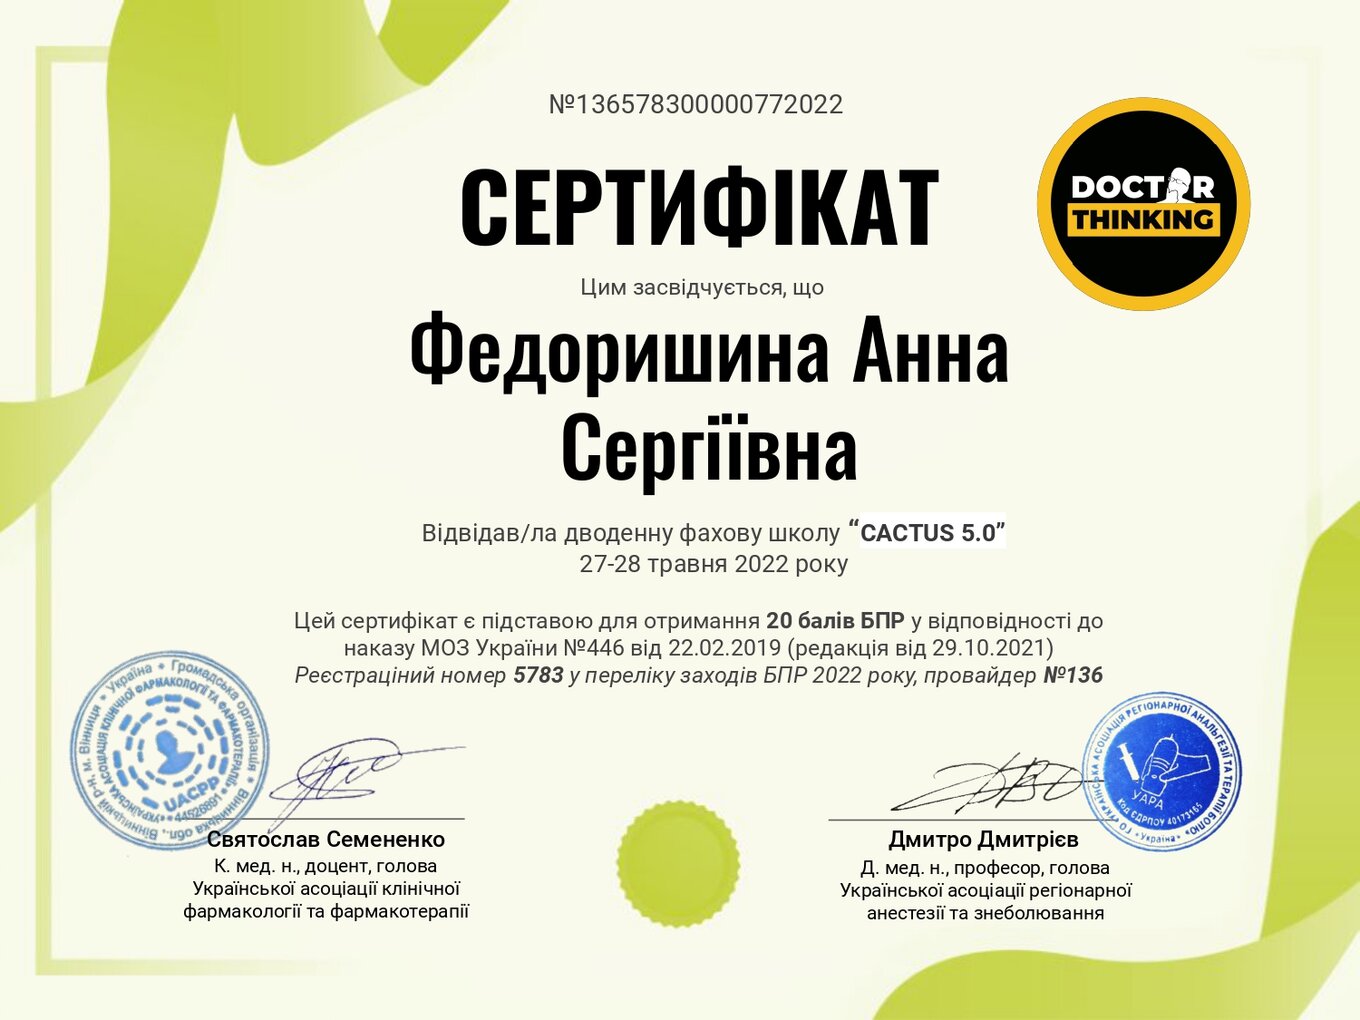 Fedorishina Anna Sergiyivna sertifikat11